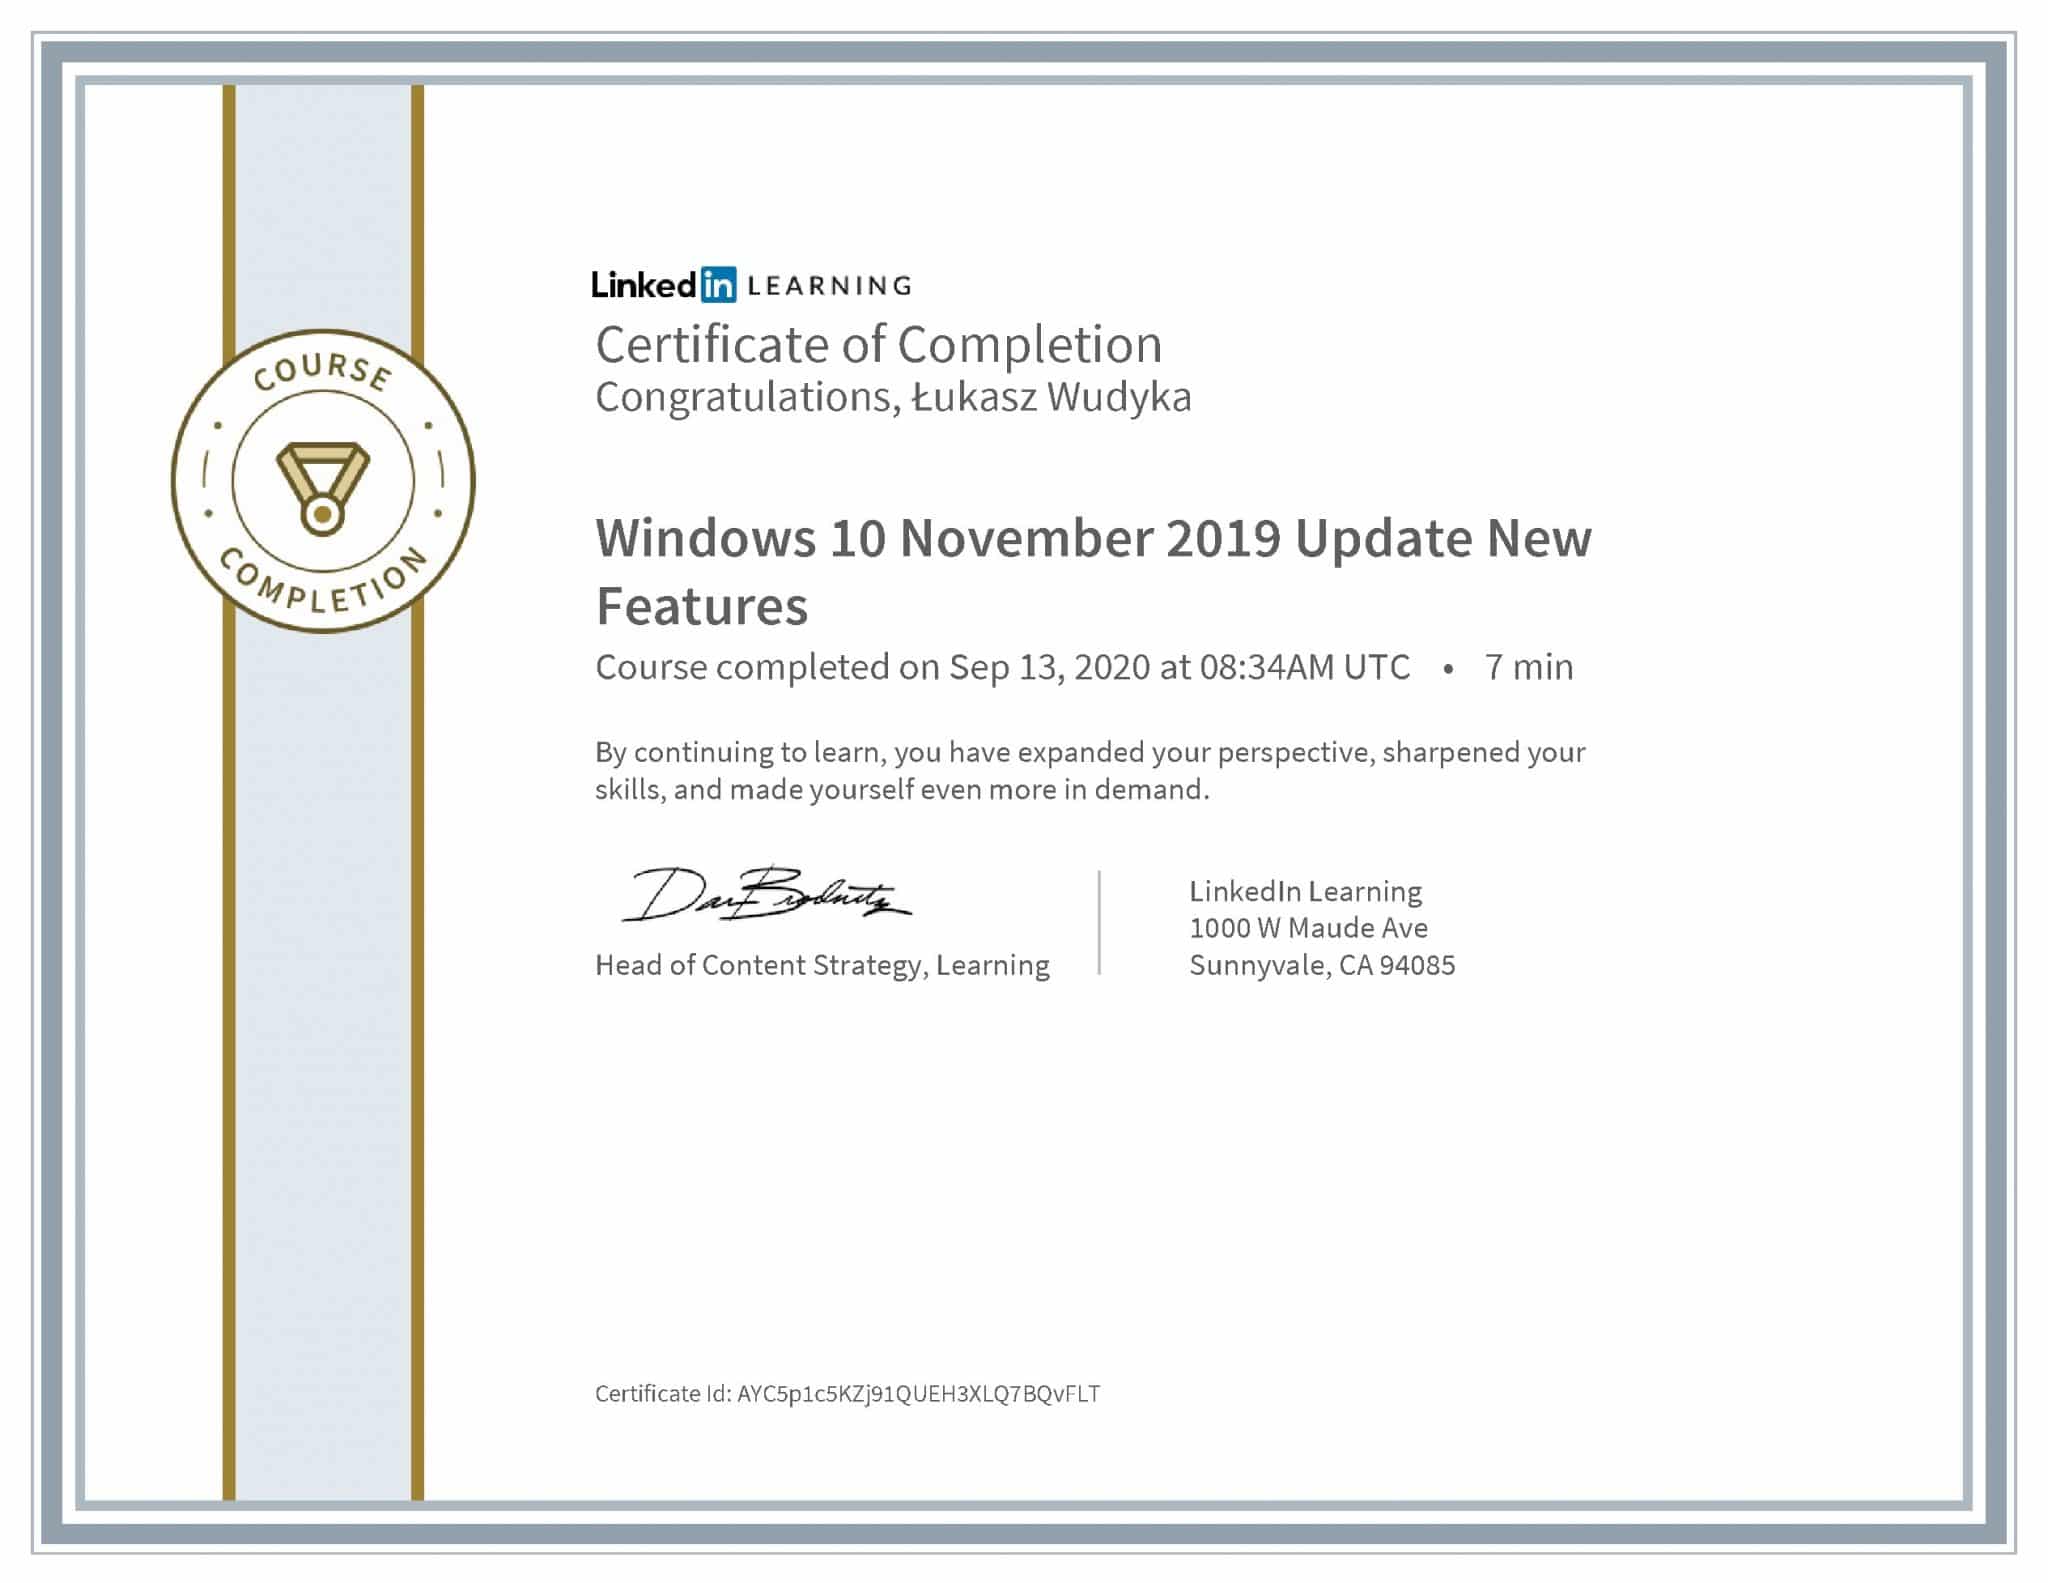 Łukasz Wudyka certyfikat LinkedIn Windows 10 November 2019 Update New Features